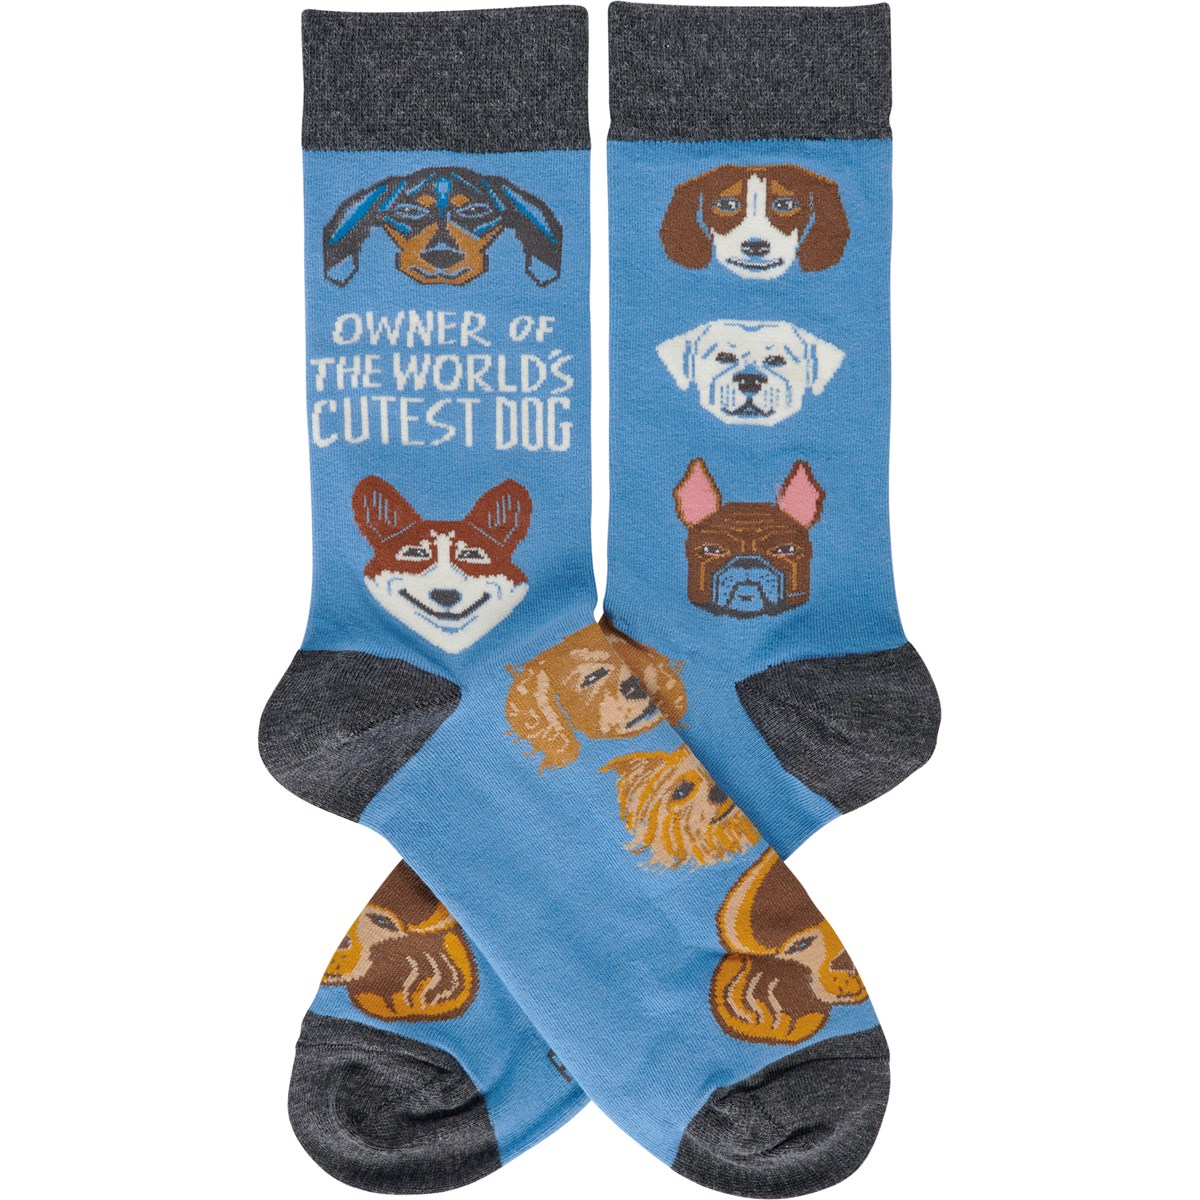 Owner Of World's Cutest Dog Socks - Cotton, Nylon, Spandex